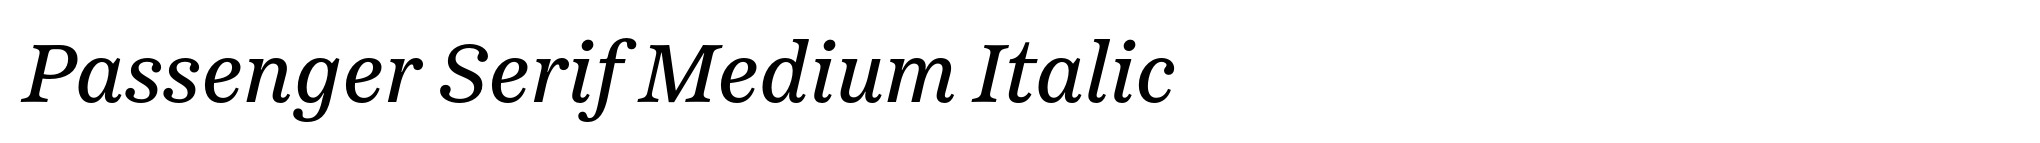 Passenger Serif Medium Italic image